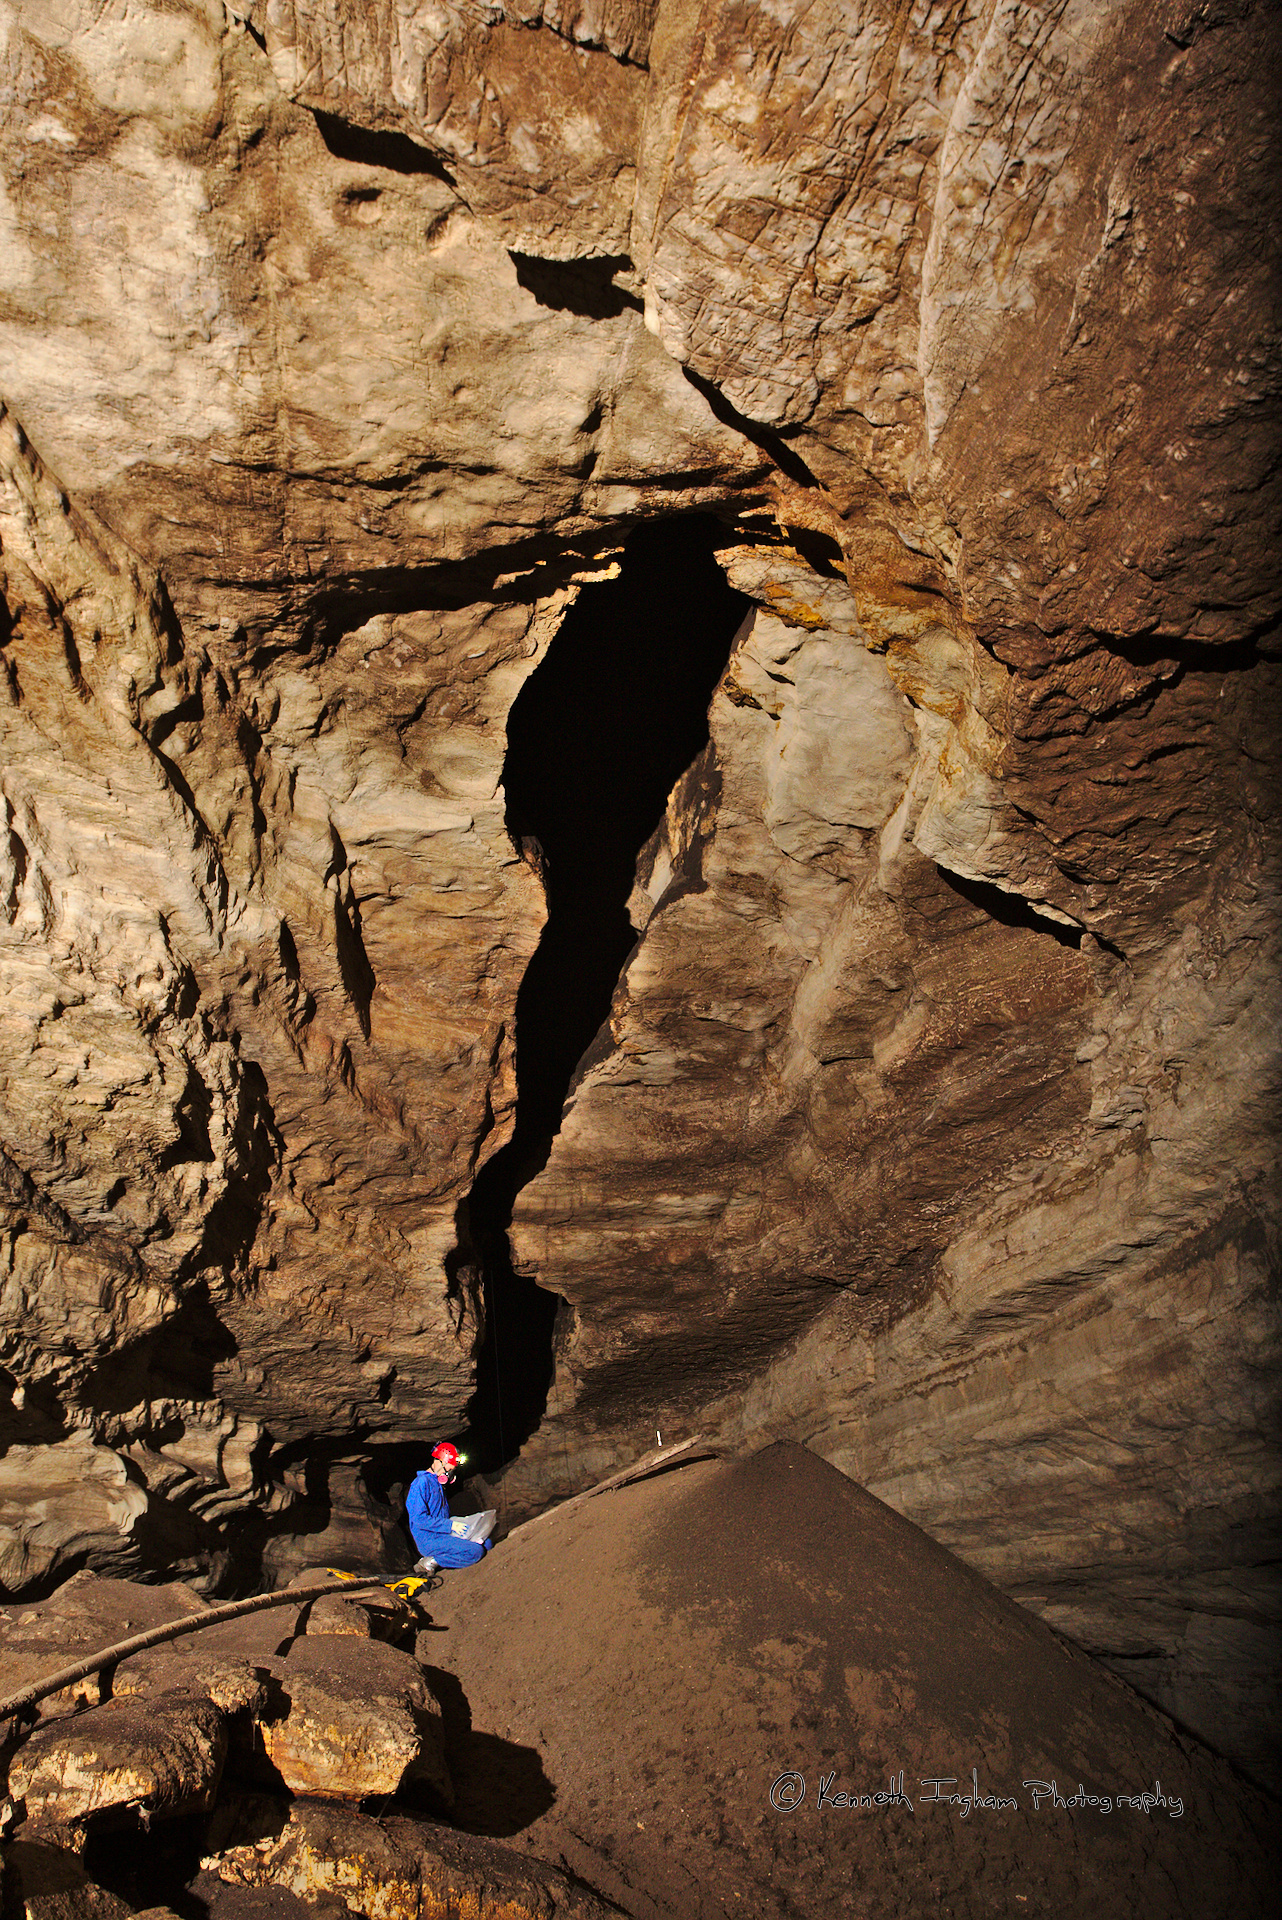 Andreas downloading data in bat cave